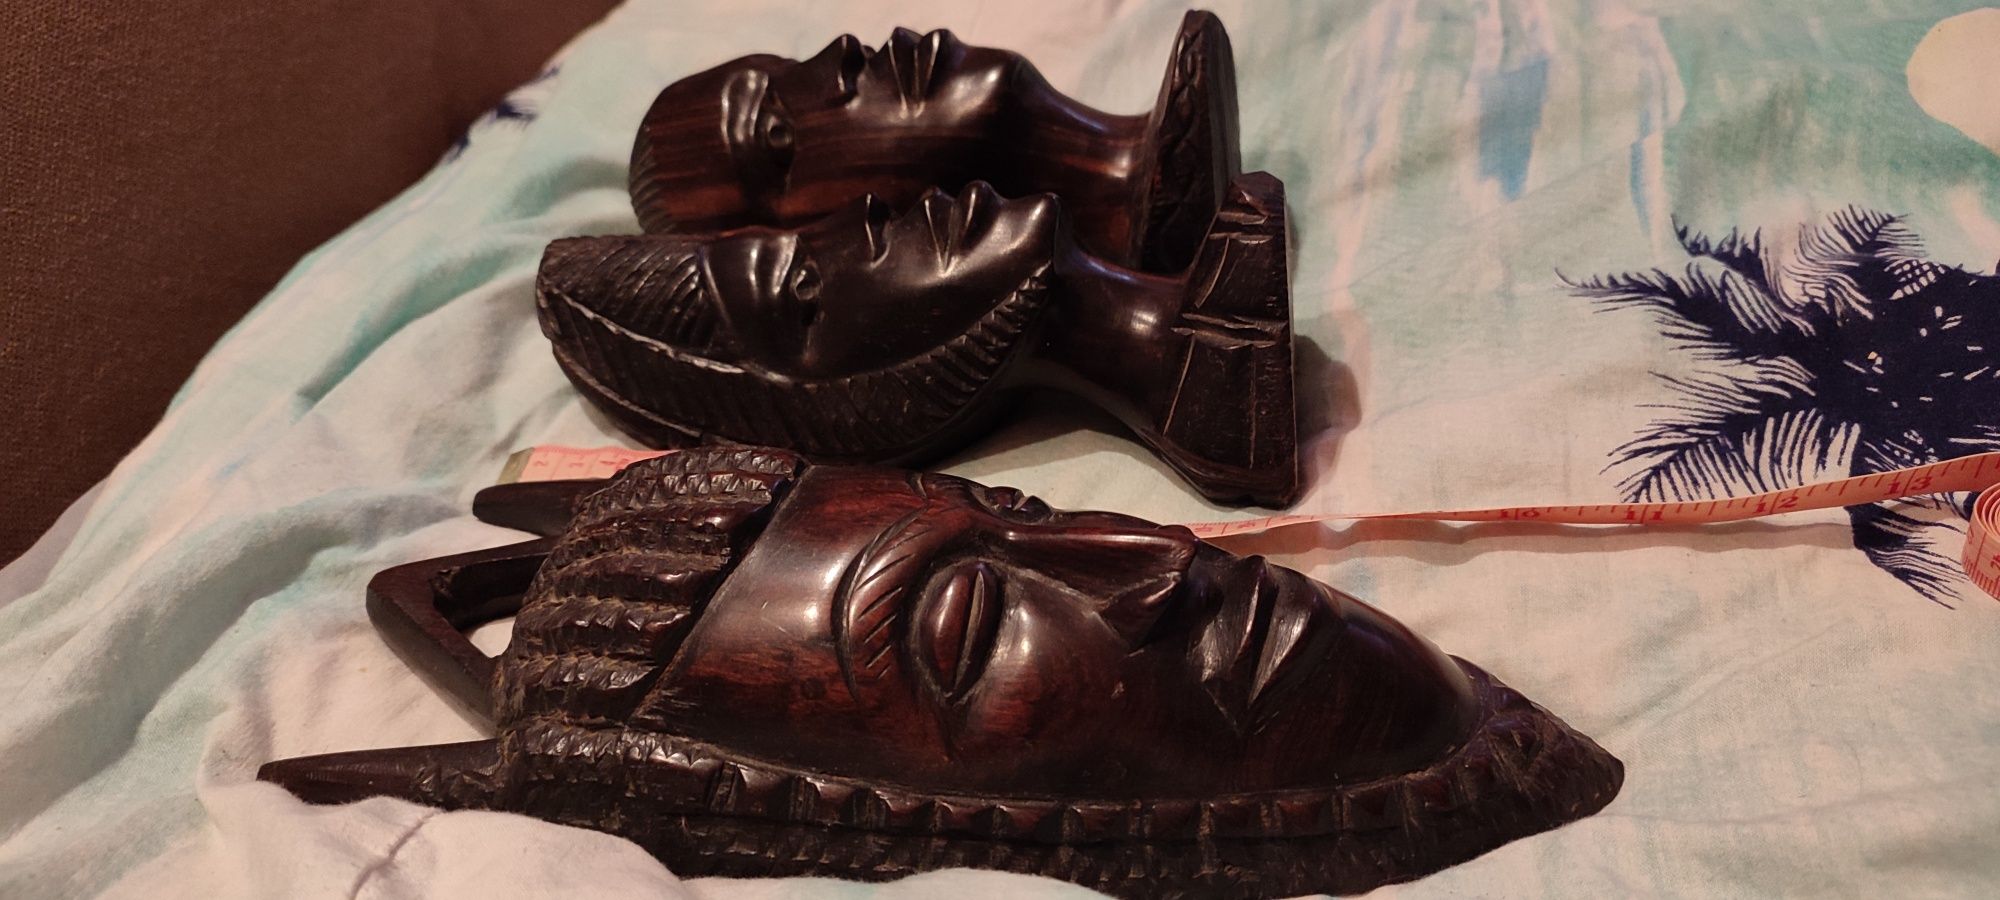 Piękne stare  hebanowe figurki afrykaniskie